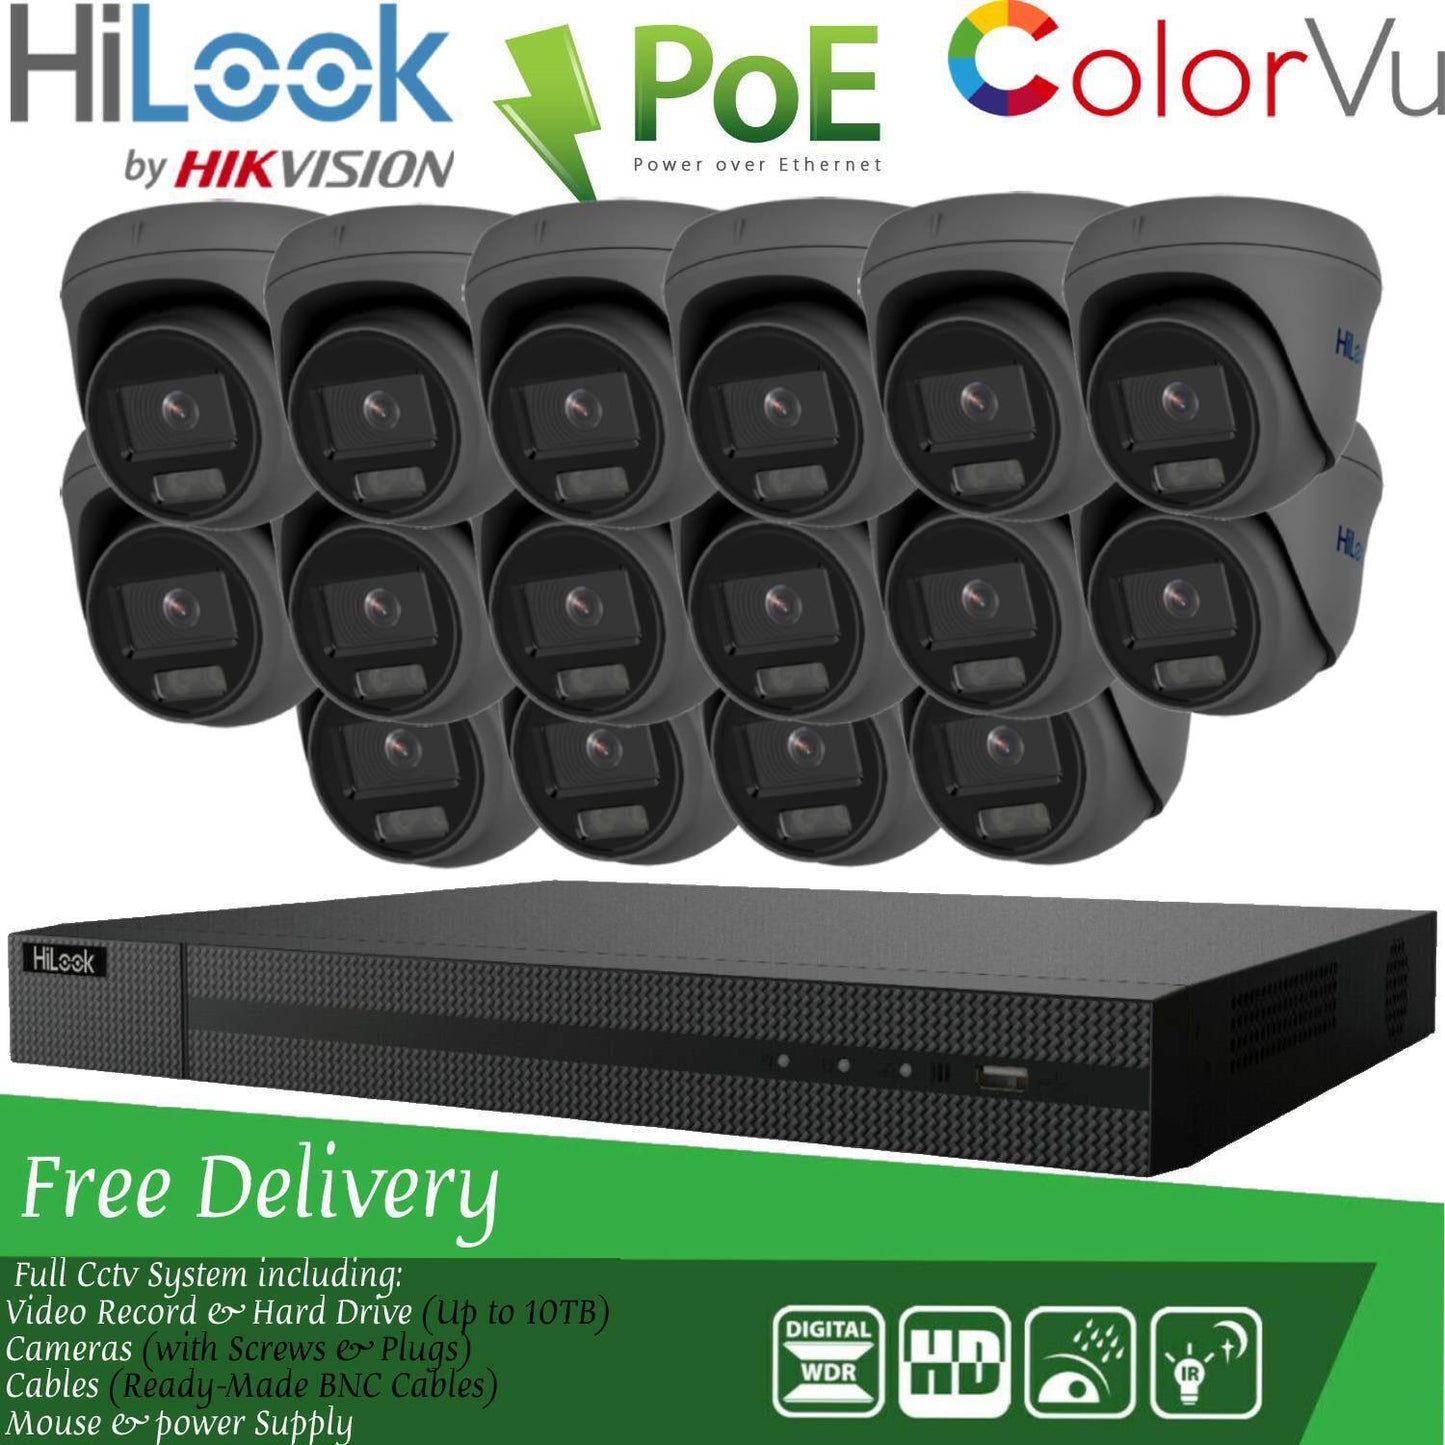 HIKVISION COLORVU POE CCTV SYSTEM IP UHD 8MP NVR 4K 5MP 24/7 COLORVU CAMERA KIT 16CH NVR 16x Cameras (grey) 4TB HDD